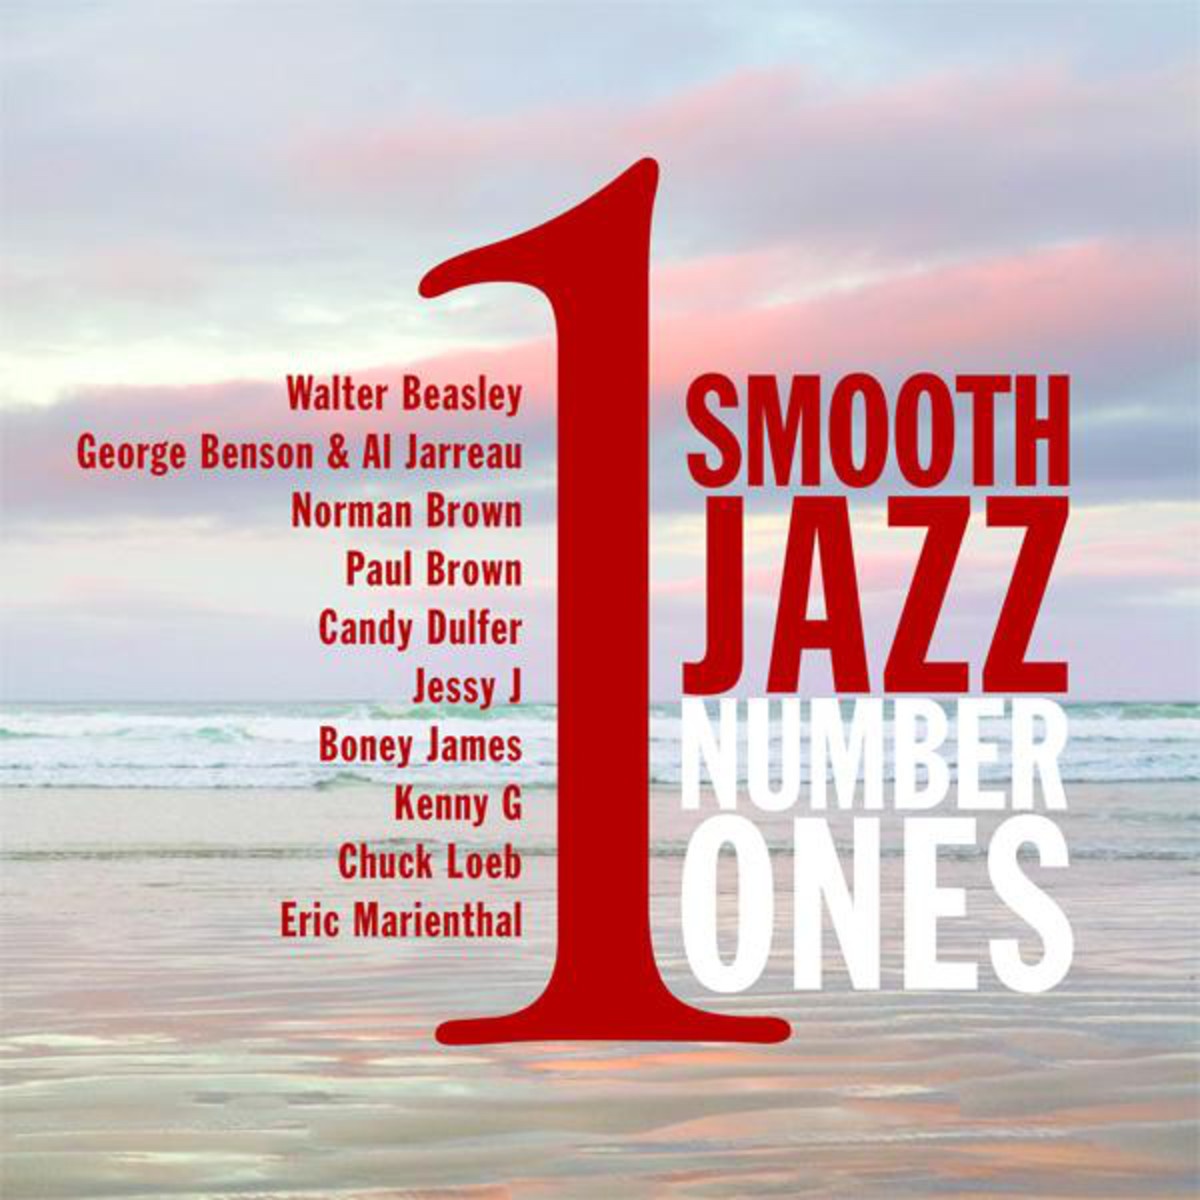 Smooth Jazz #1s